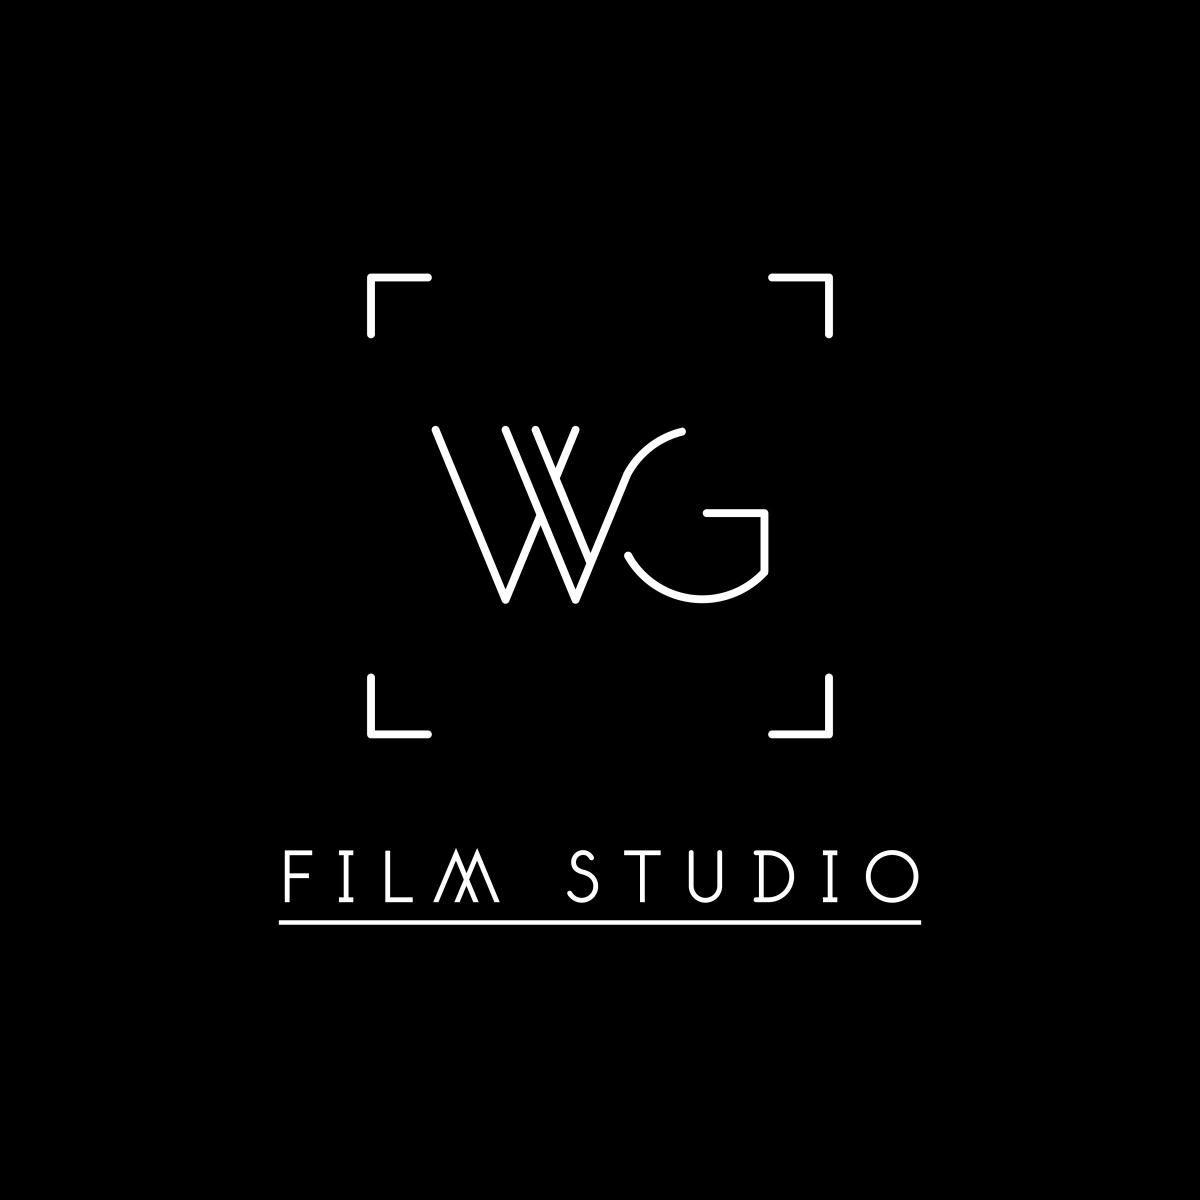 WG Film Studio